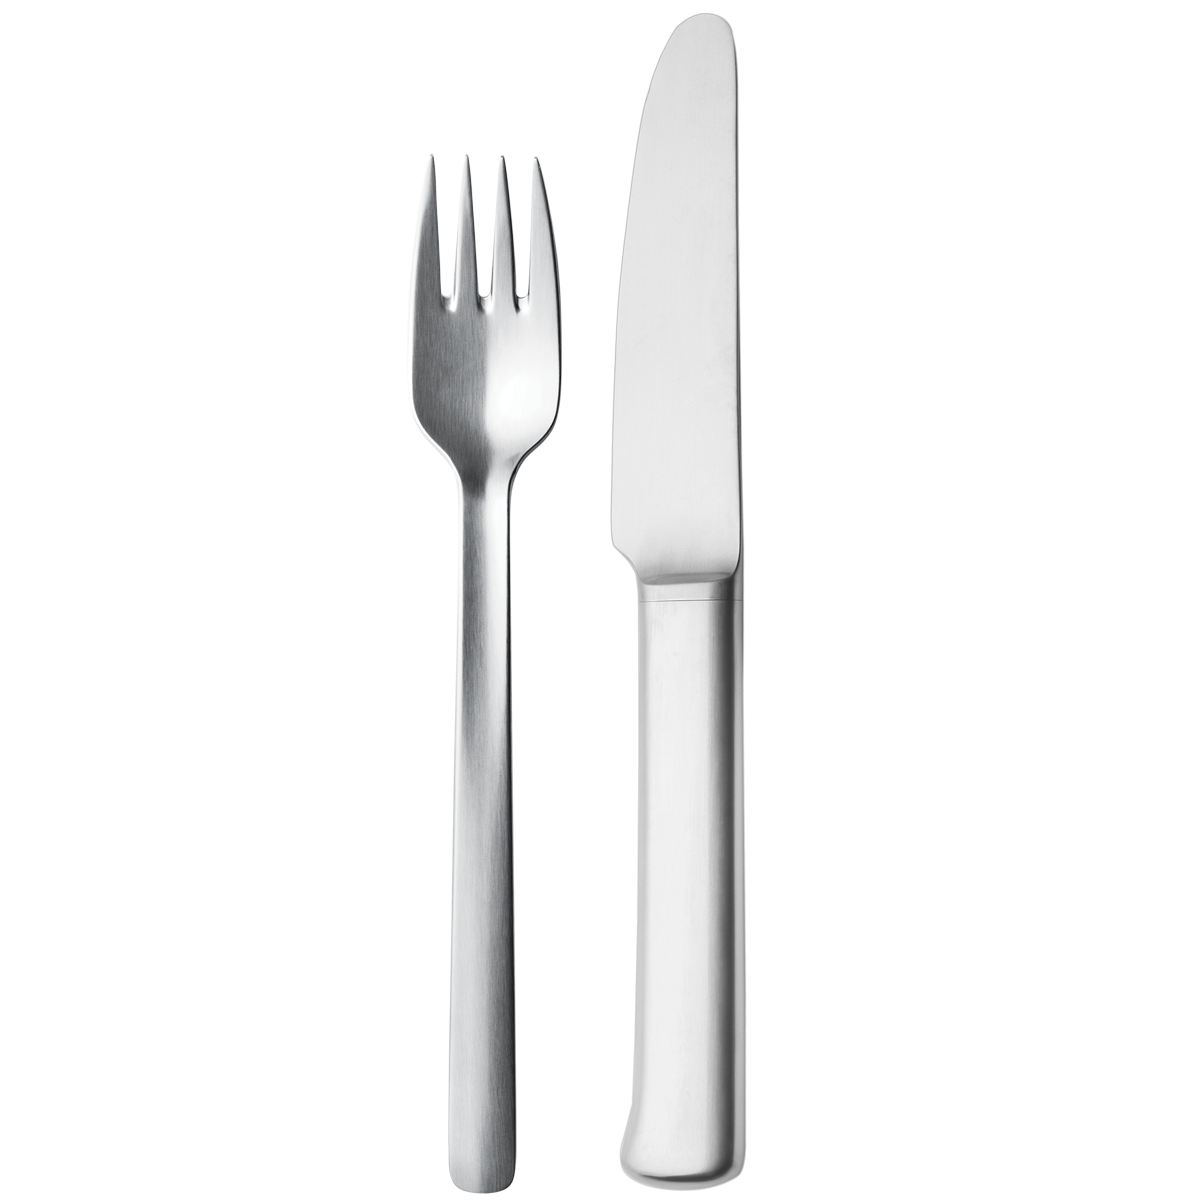 Forks PNG images, free fork picture download.